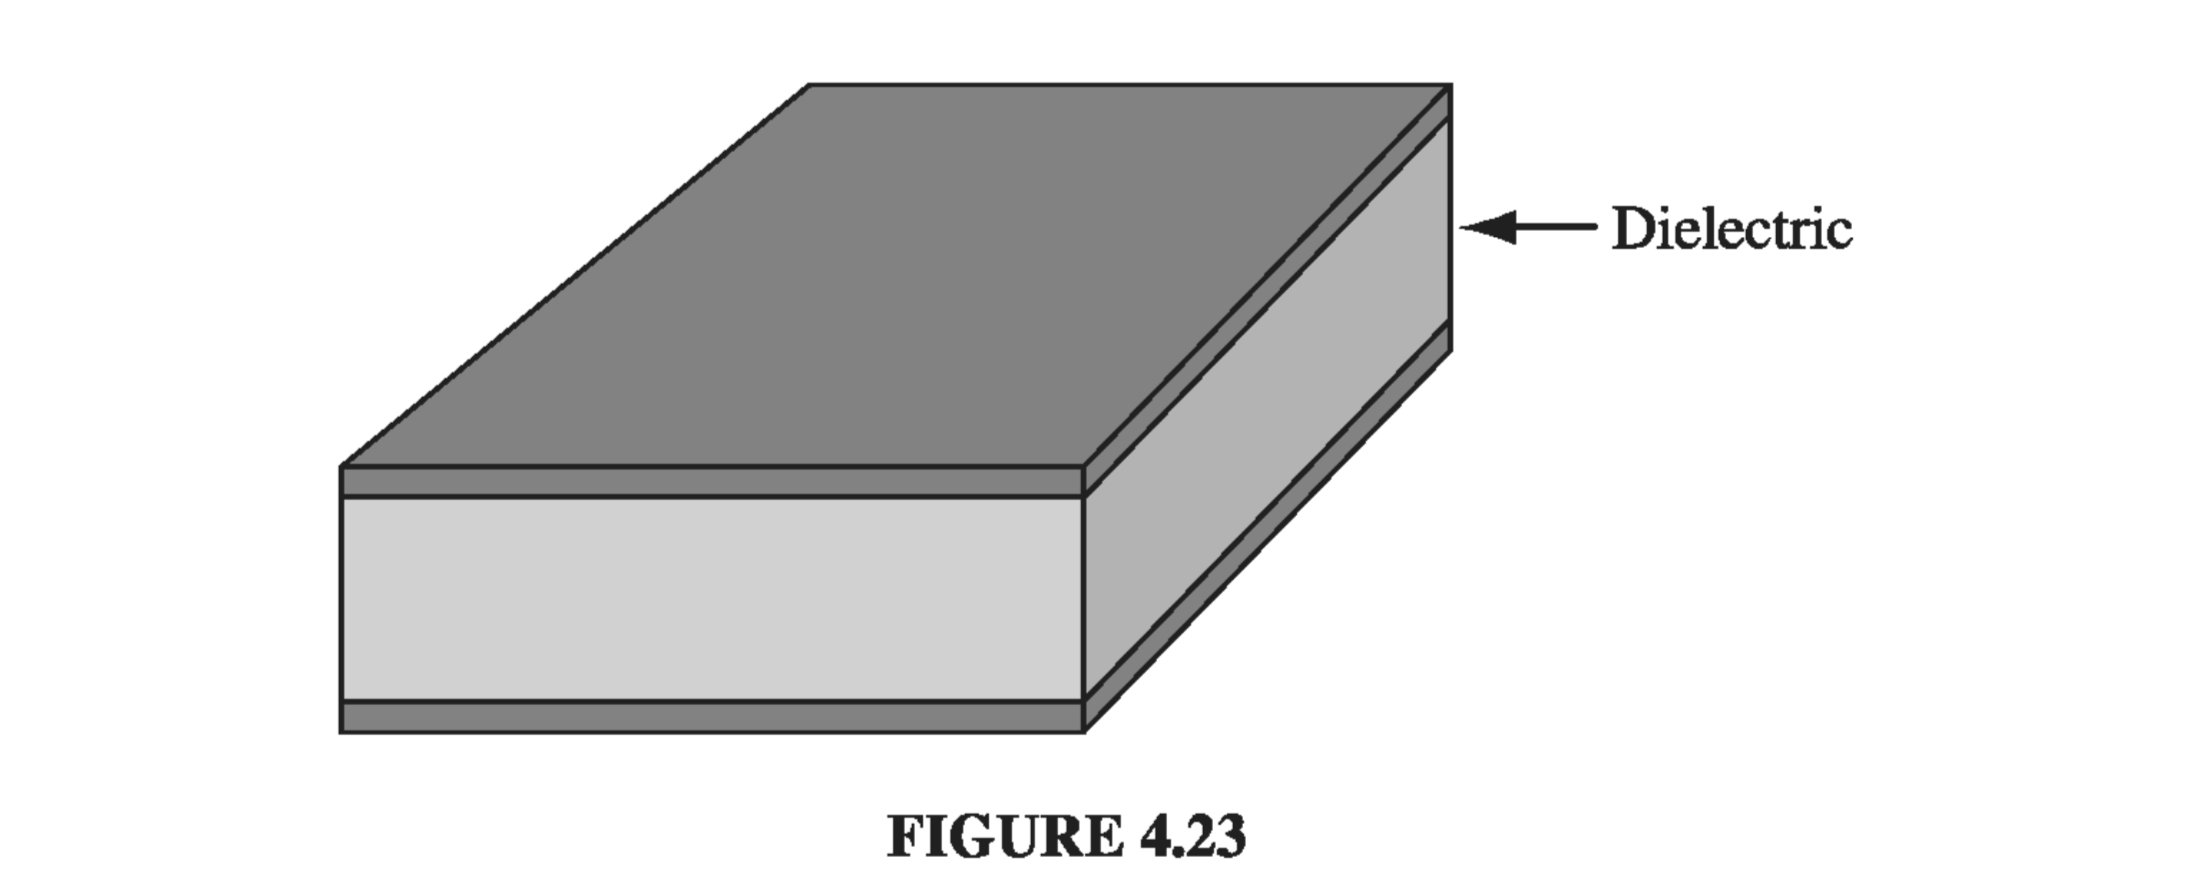 Figure 4.23